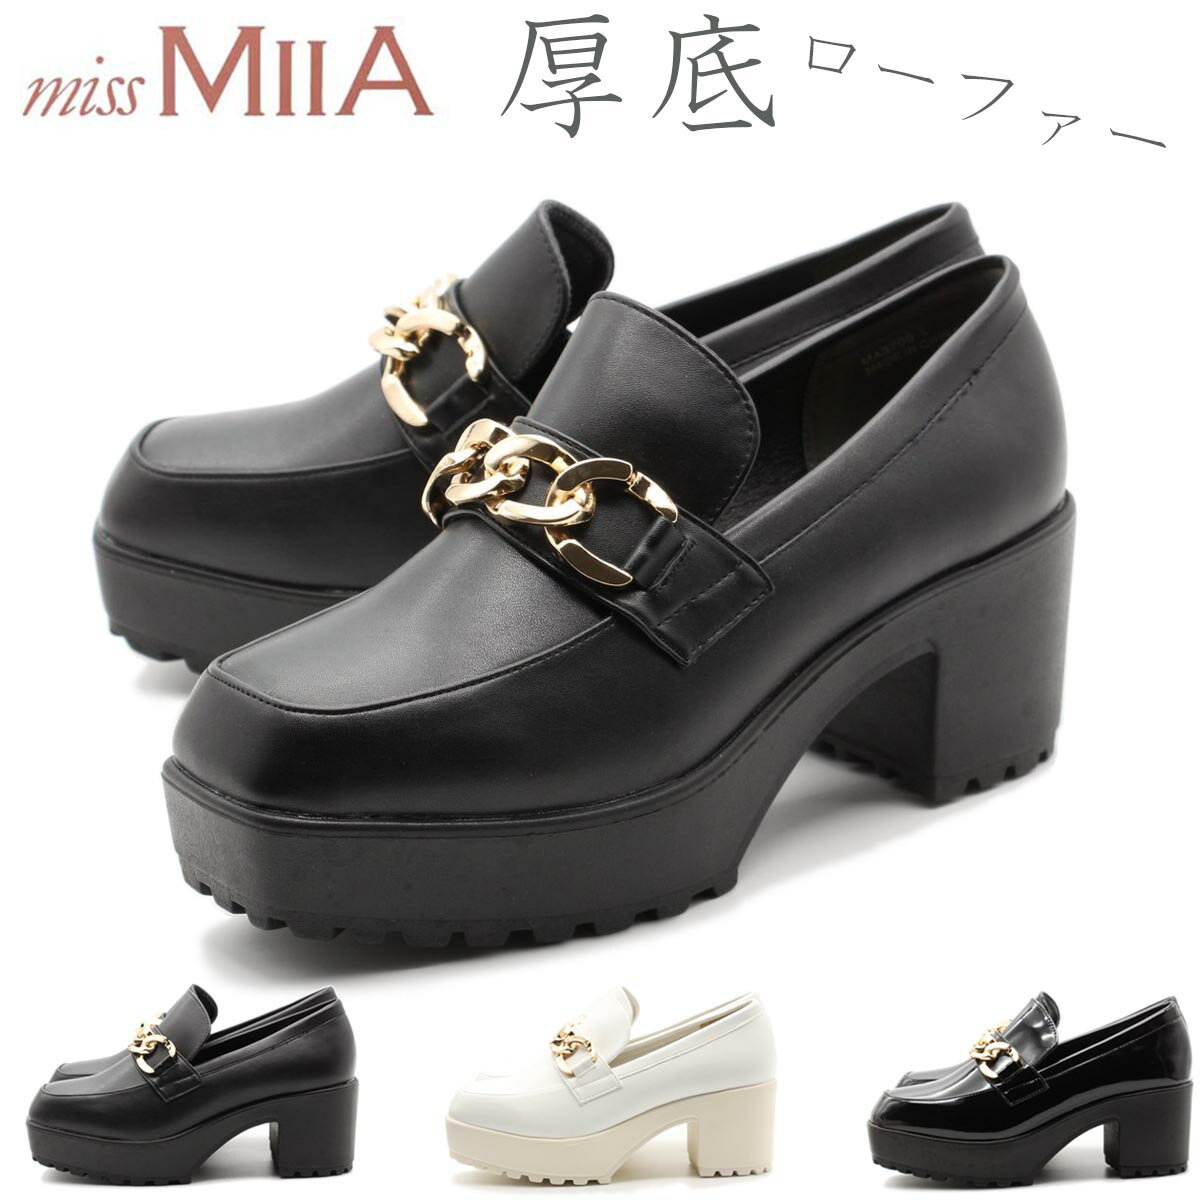 miss MIIA ミスミーア パンプス カジュアル シューズ レディース 靴 ガーリー かわいい 美脚 歩きやすい ma3709